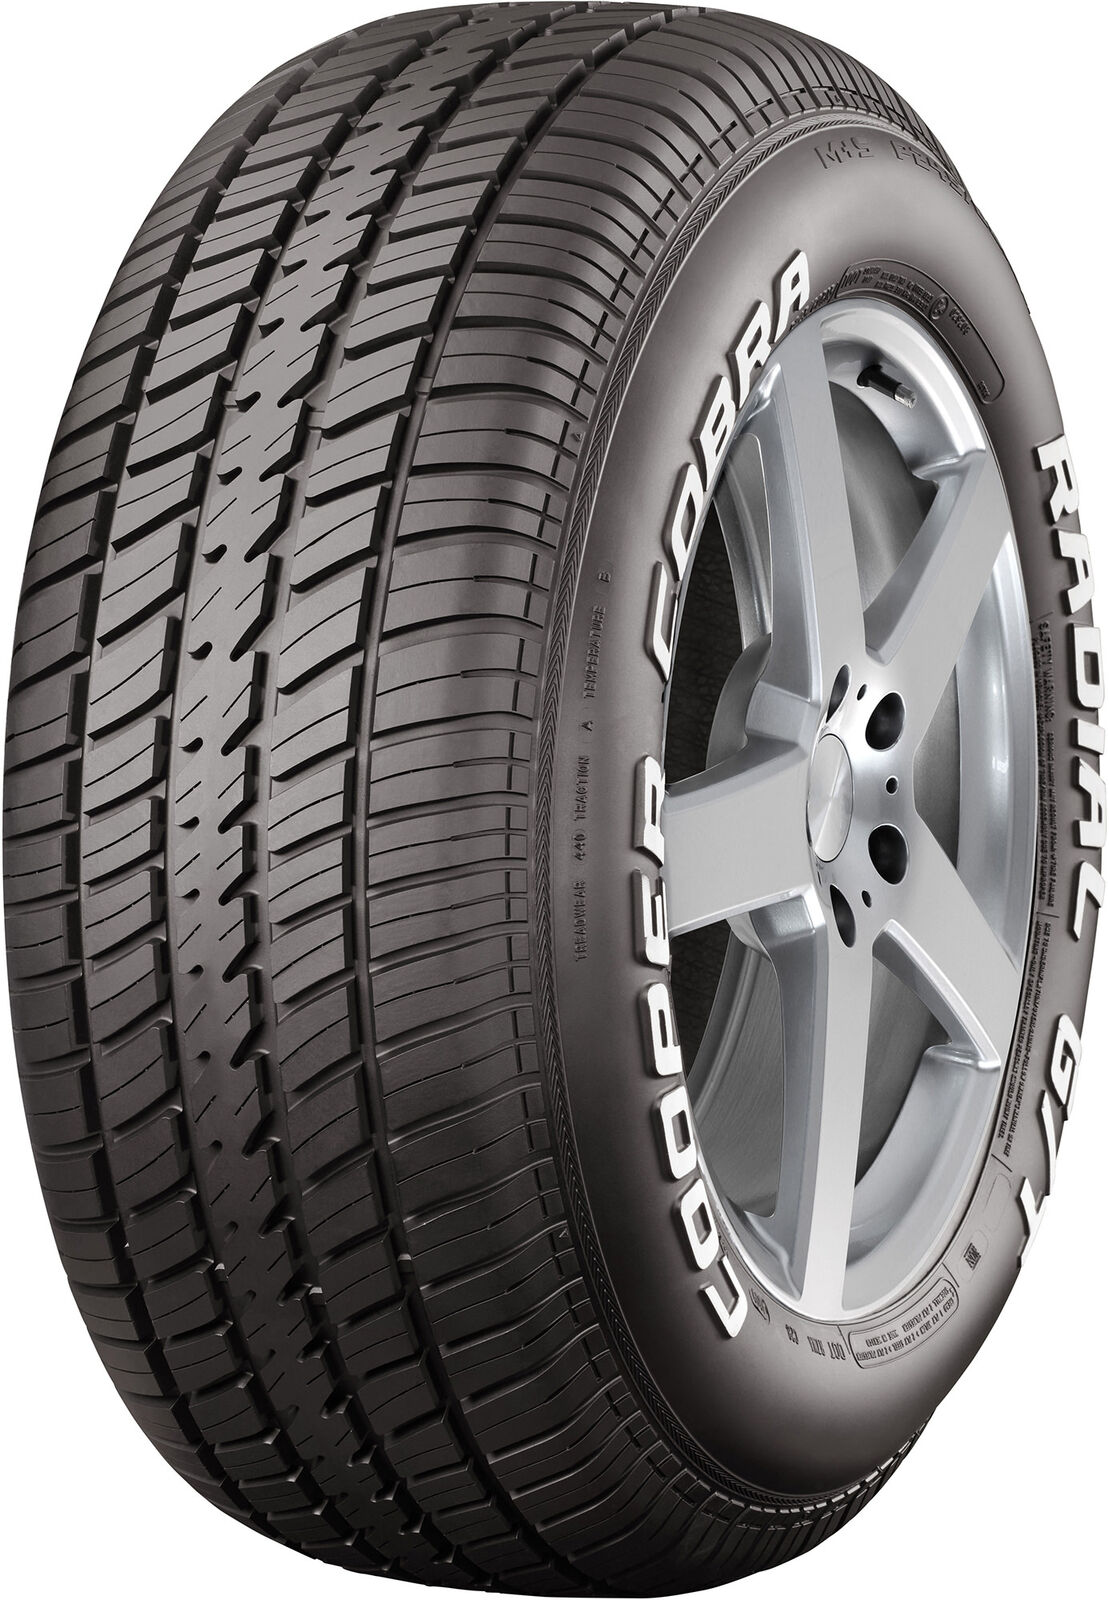 (Qty: 4) P215/70R14 Cooper Cobra Radial G/T 96T tire